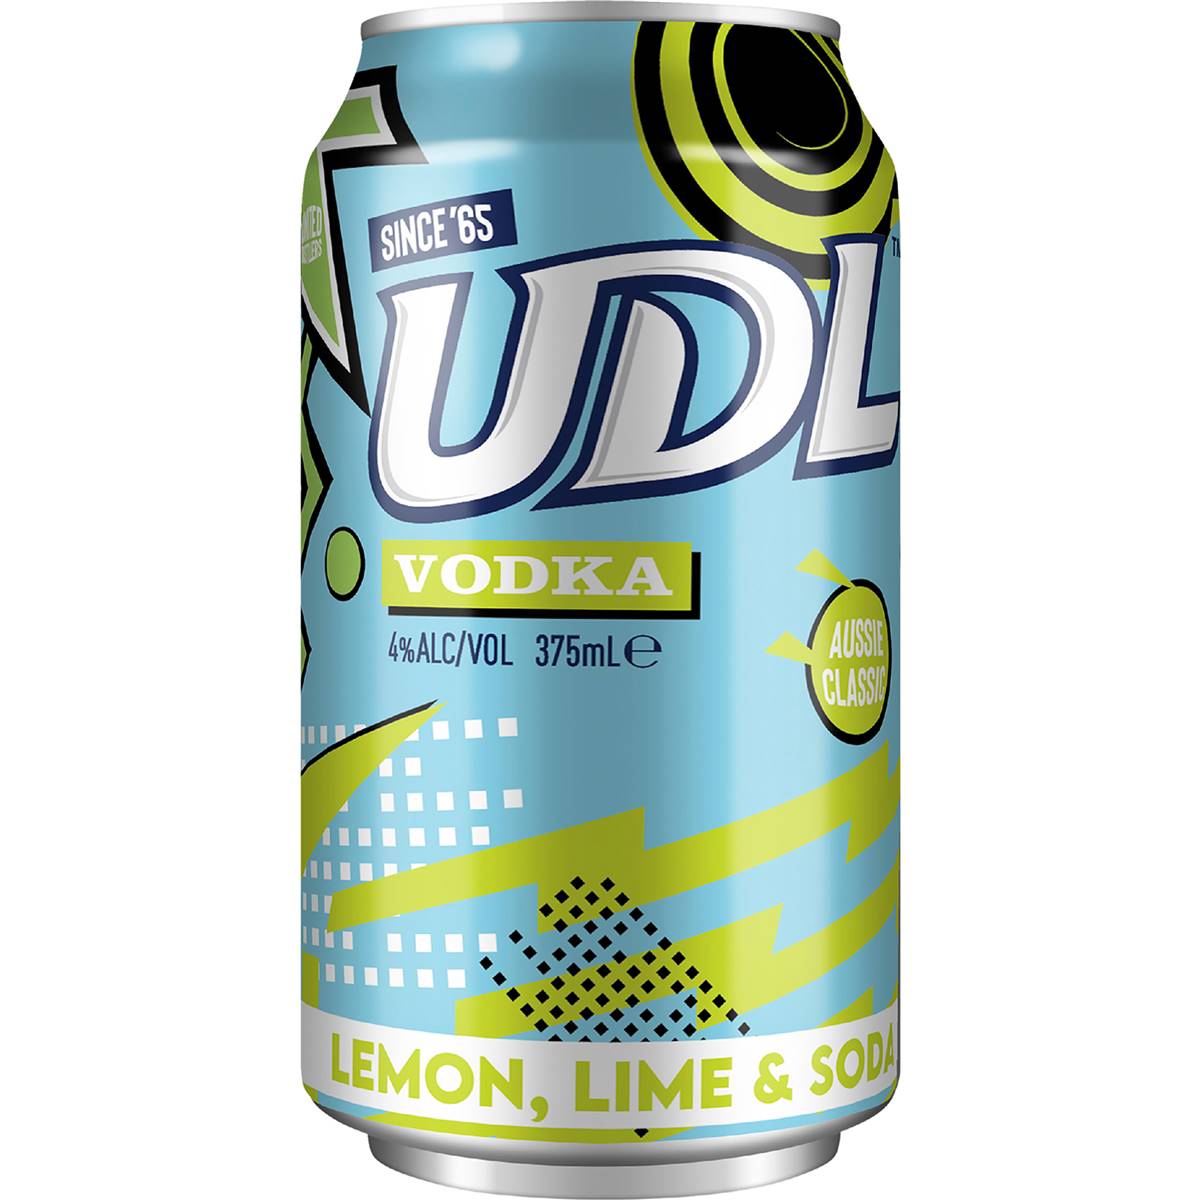 Calories in Udl Vodka Lemon Lime & Soda Can